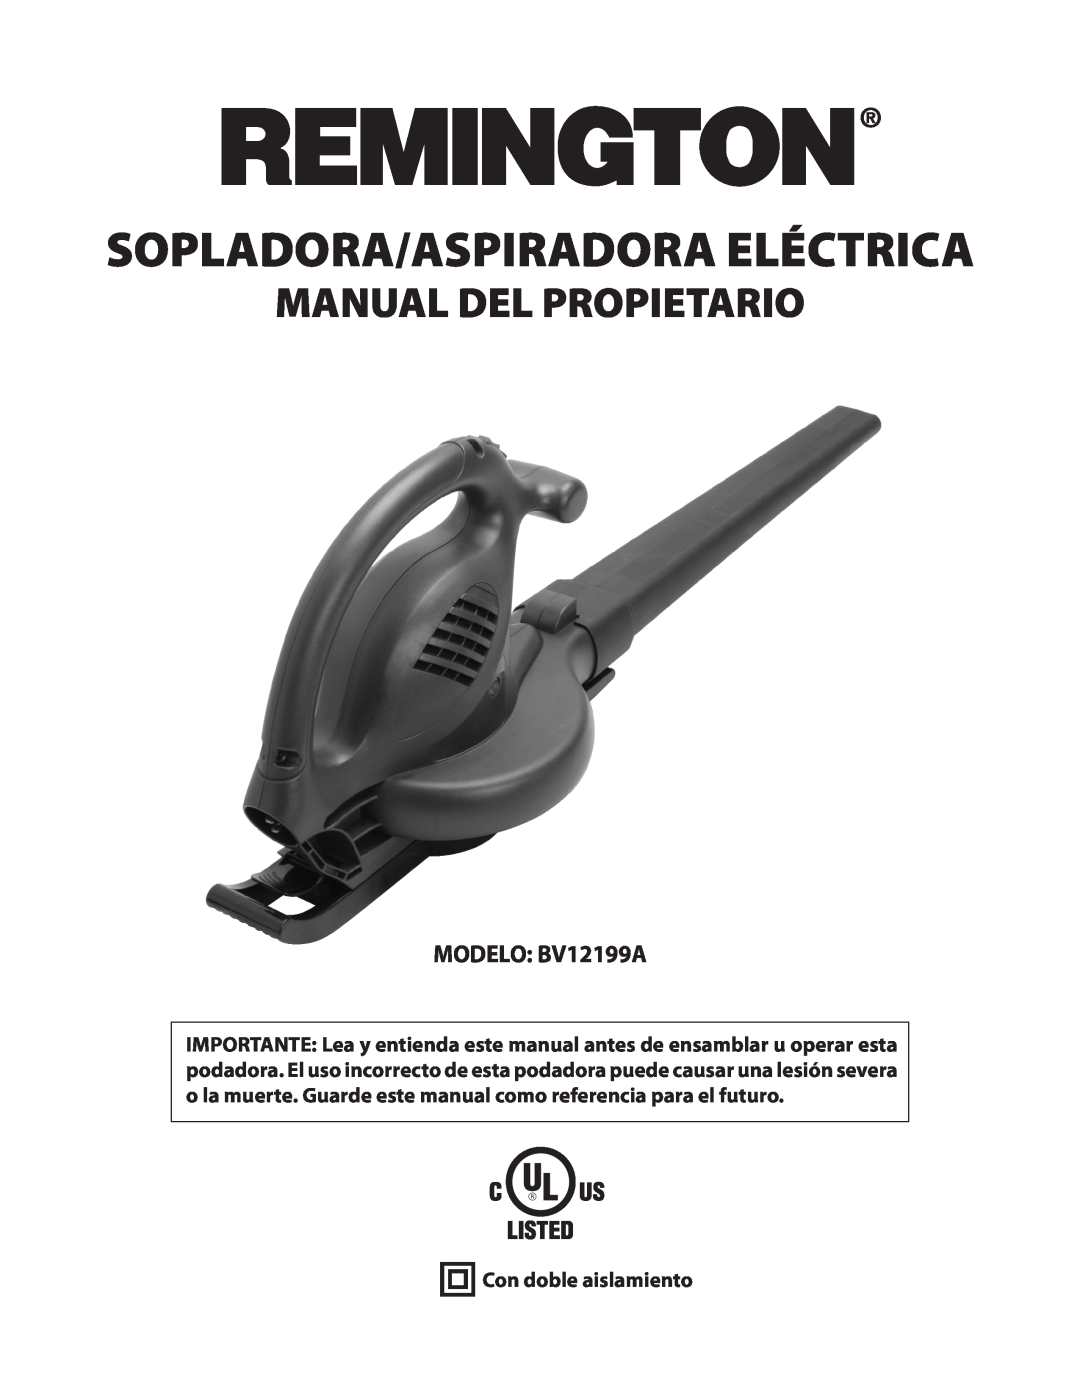 Remington owner manual Sopladora/Aspiradora Eléctrica, Manual Del Propietario, MODELO BV12199A, Con doble aislamiento 